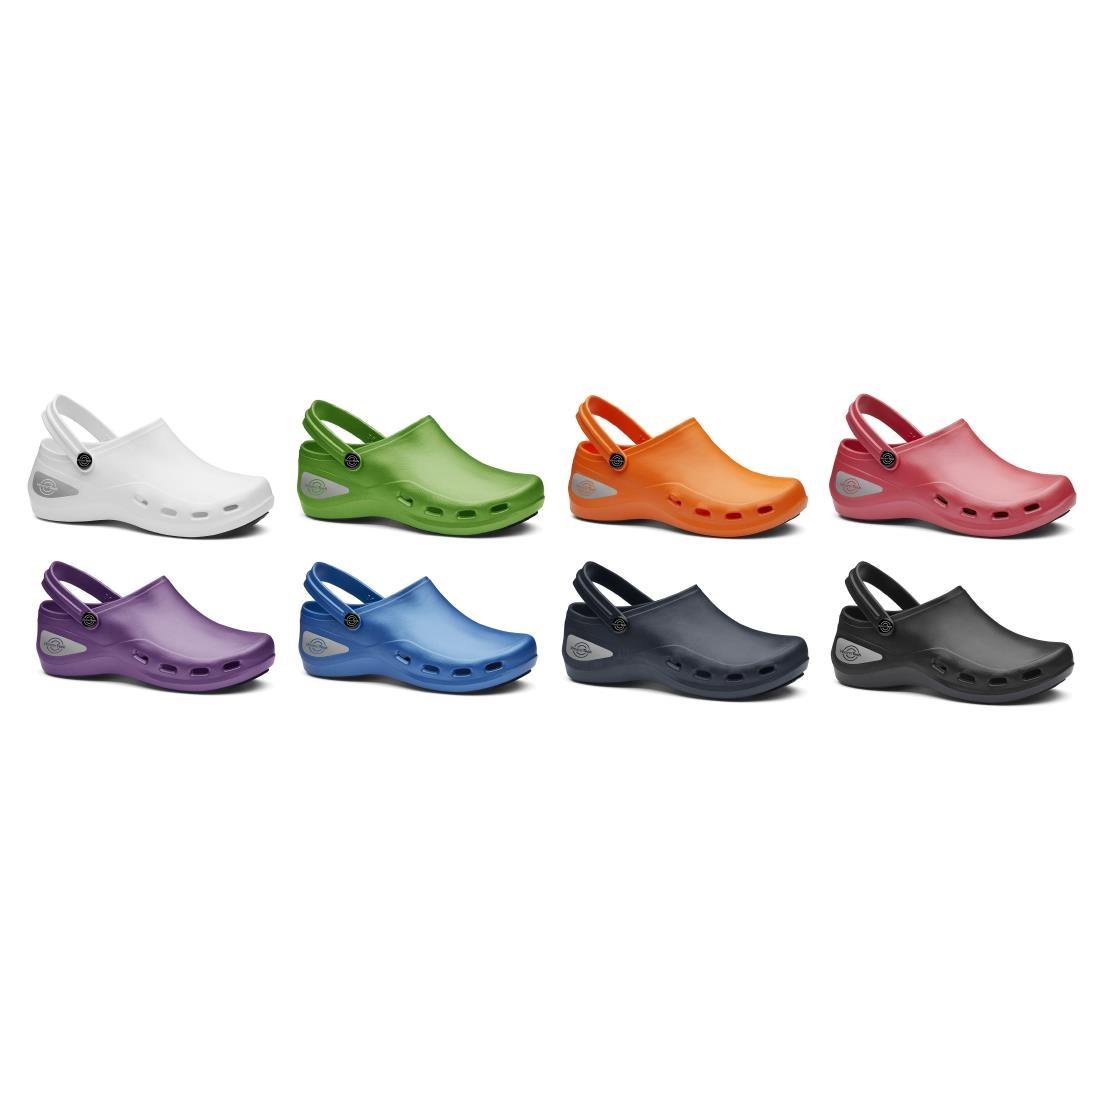 WearerTech Unisex Invigorate Black Safety Shoe Size 8 - BB195-42  - 7